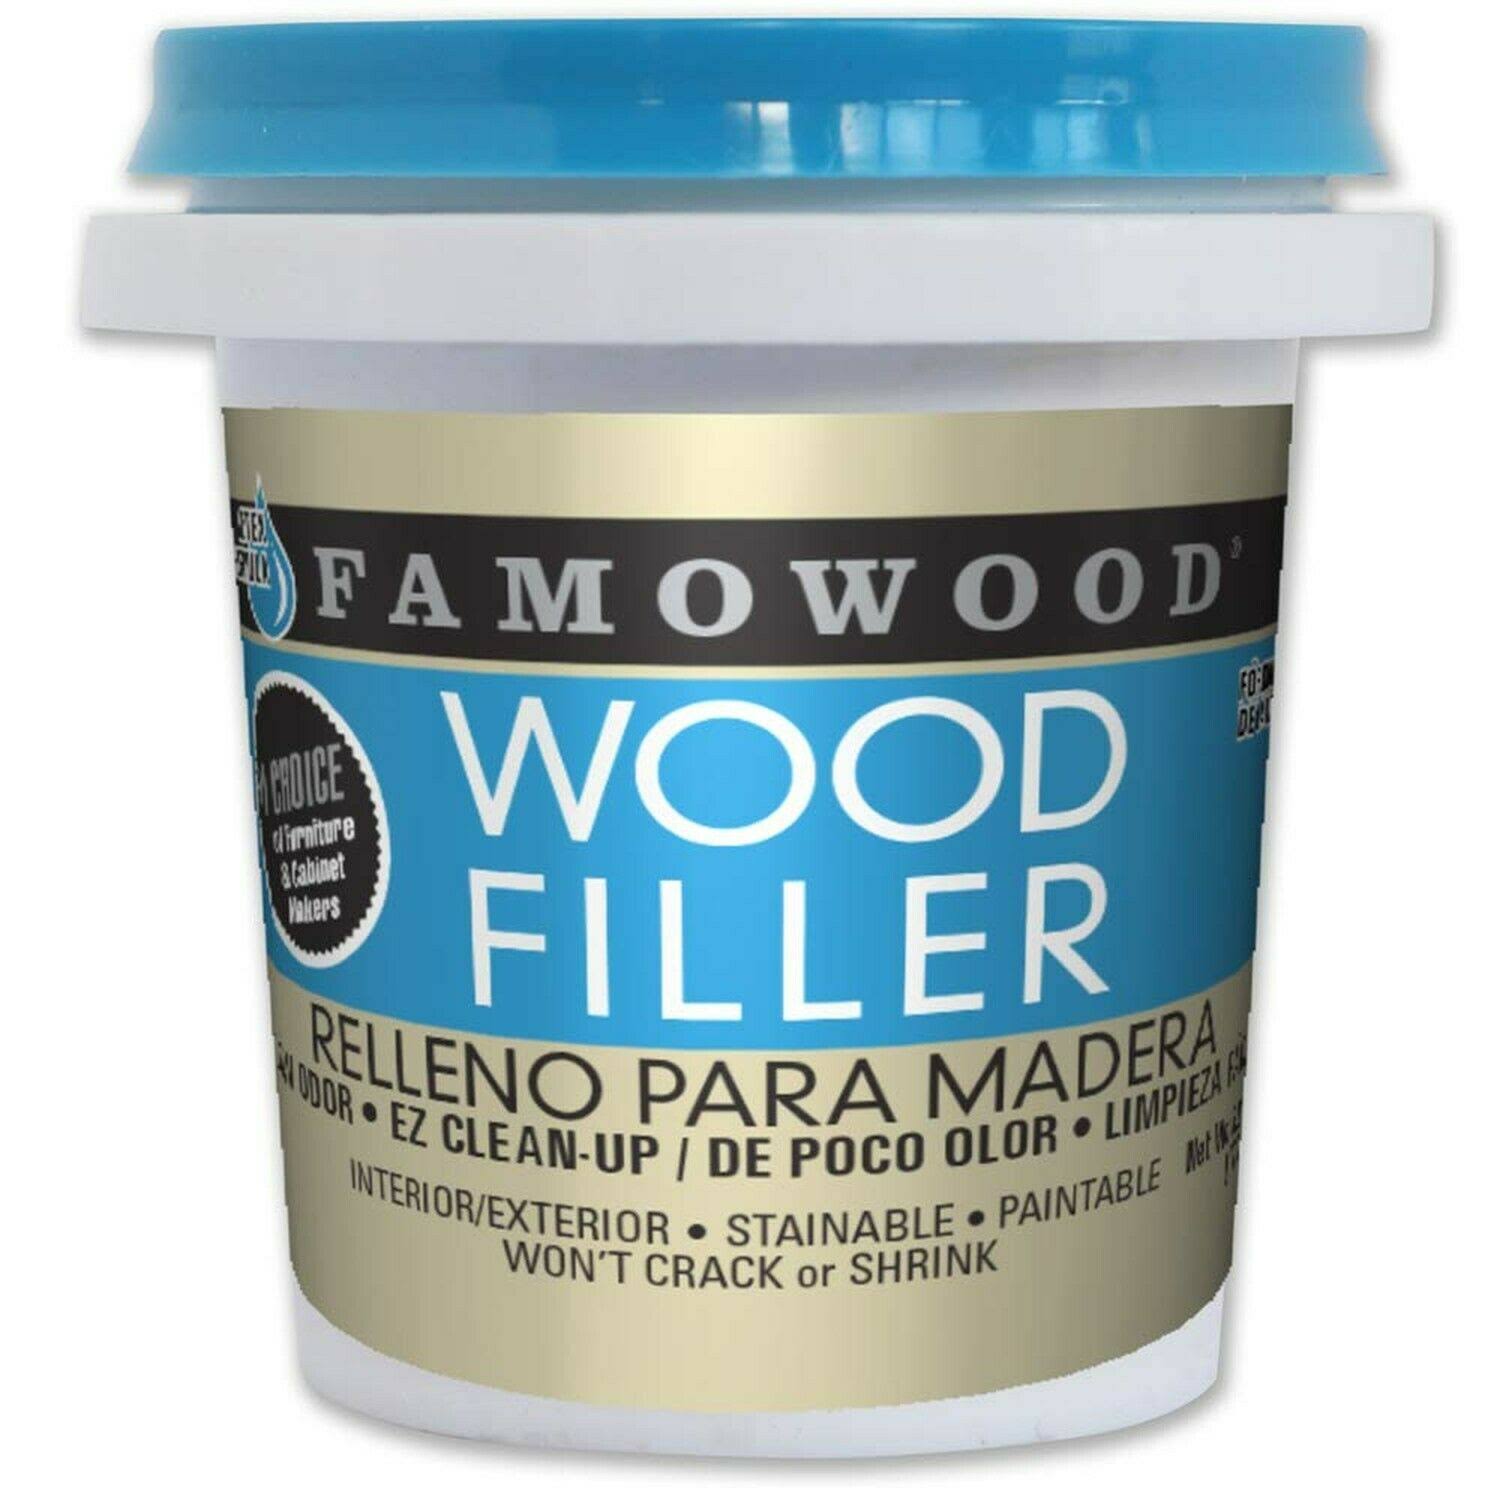 FamoWood 40042148 Latex Wood Filler - 1/4 Pint, White Pine